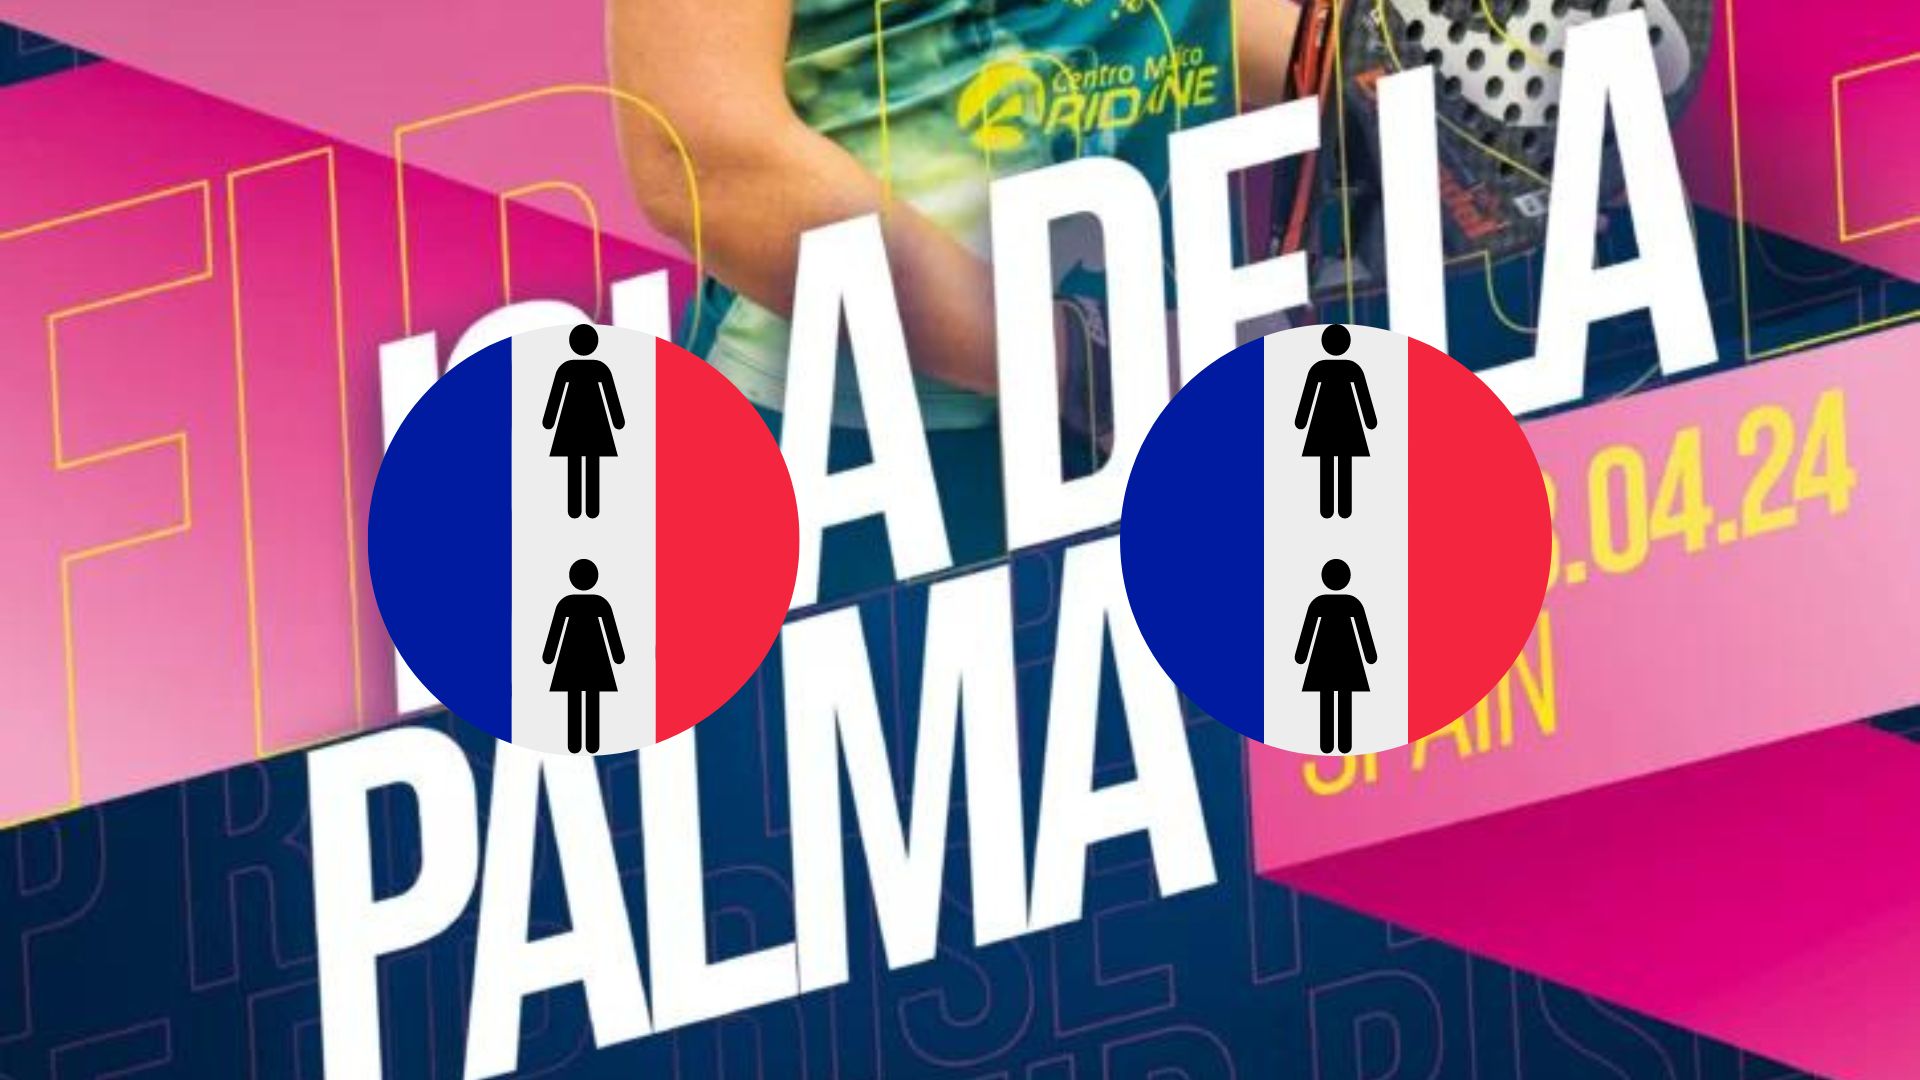 FIP Isla de la Palma – Il programma francese